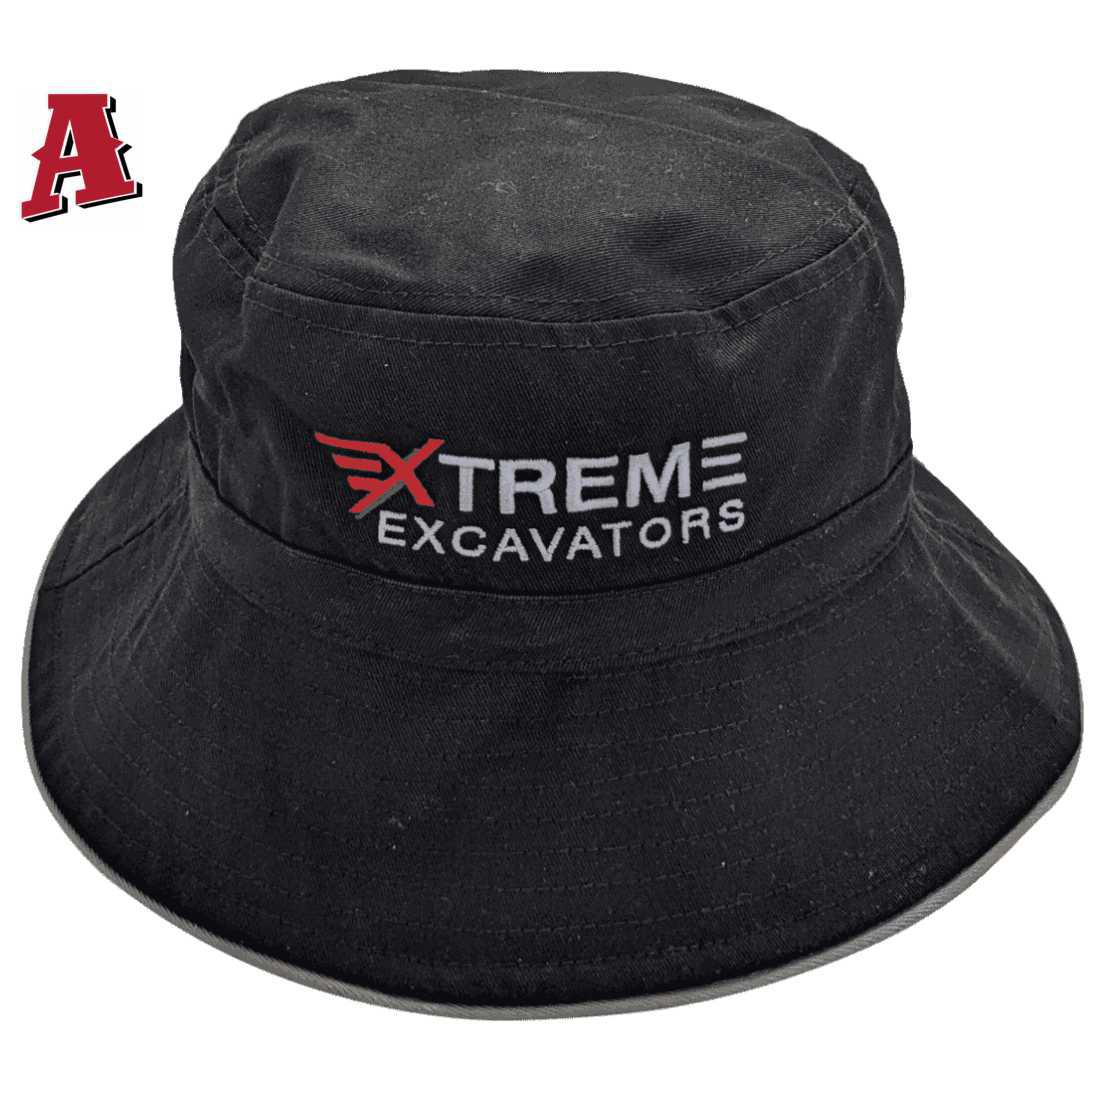 Extreme Excavators Paget Qld Aussie Bucket Hat with Adjustable Crown Size and Optional Brim Width 5 - 7.5cm